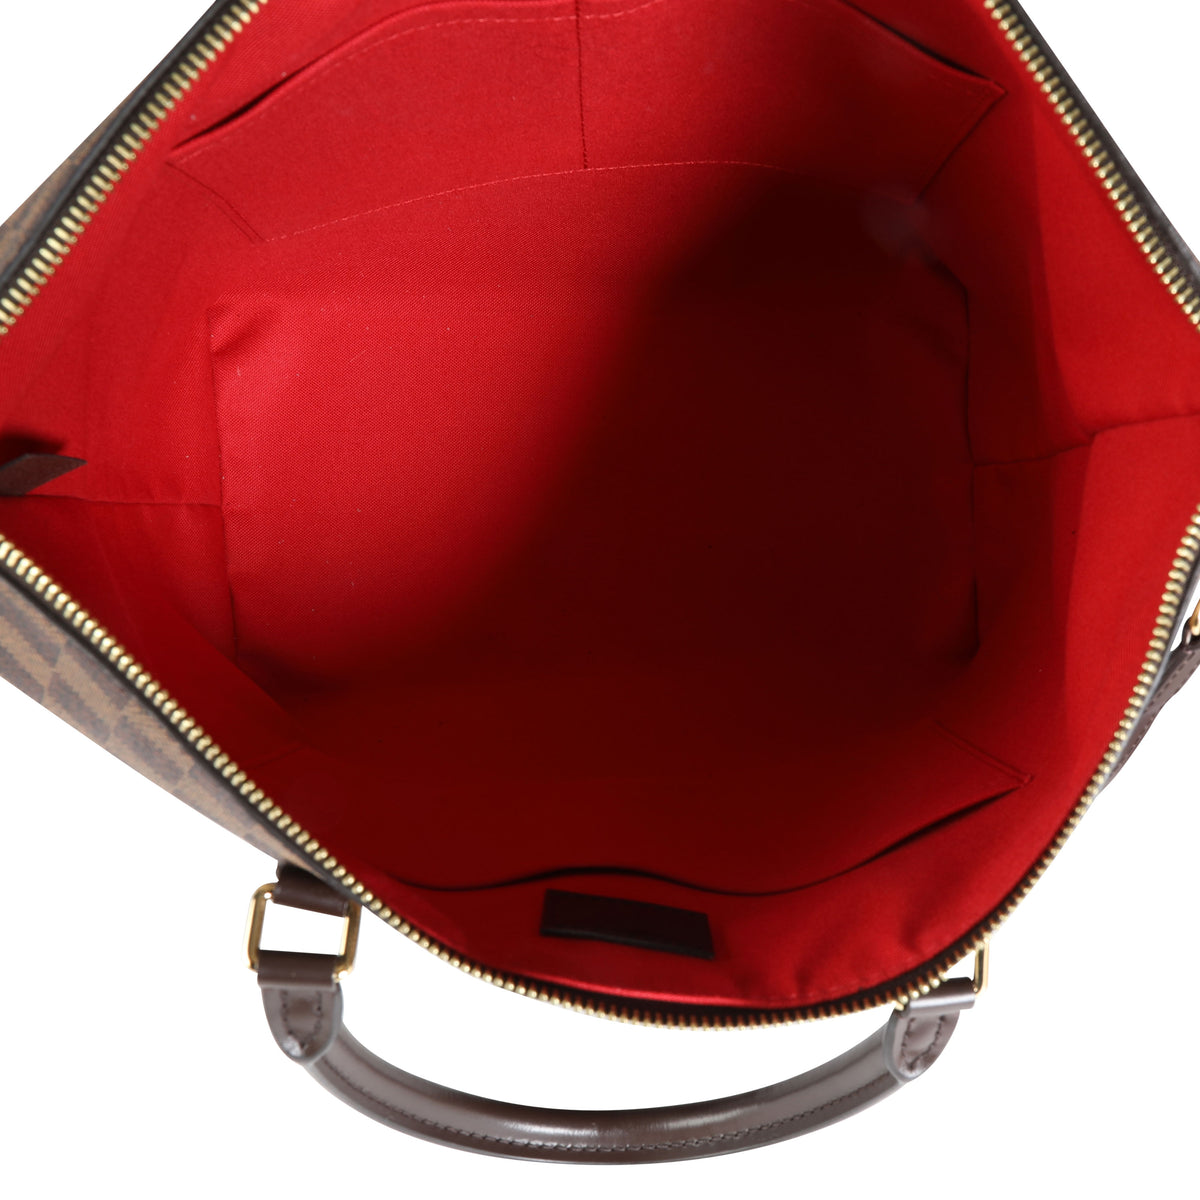 Louis Vuitton Damier Ebene Canvas Siena Handbag